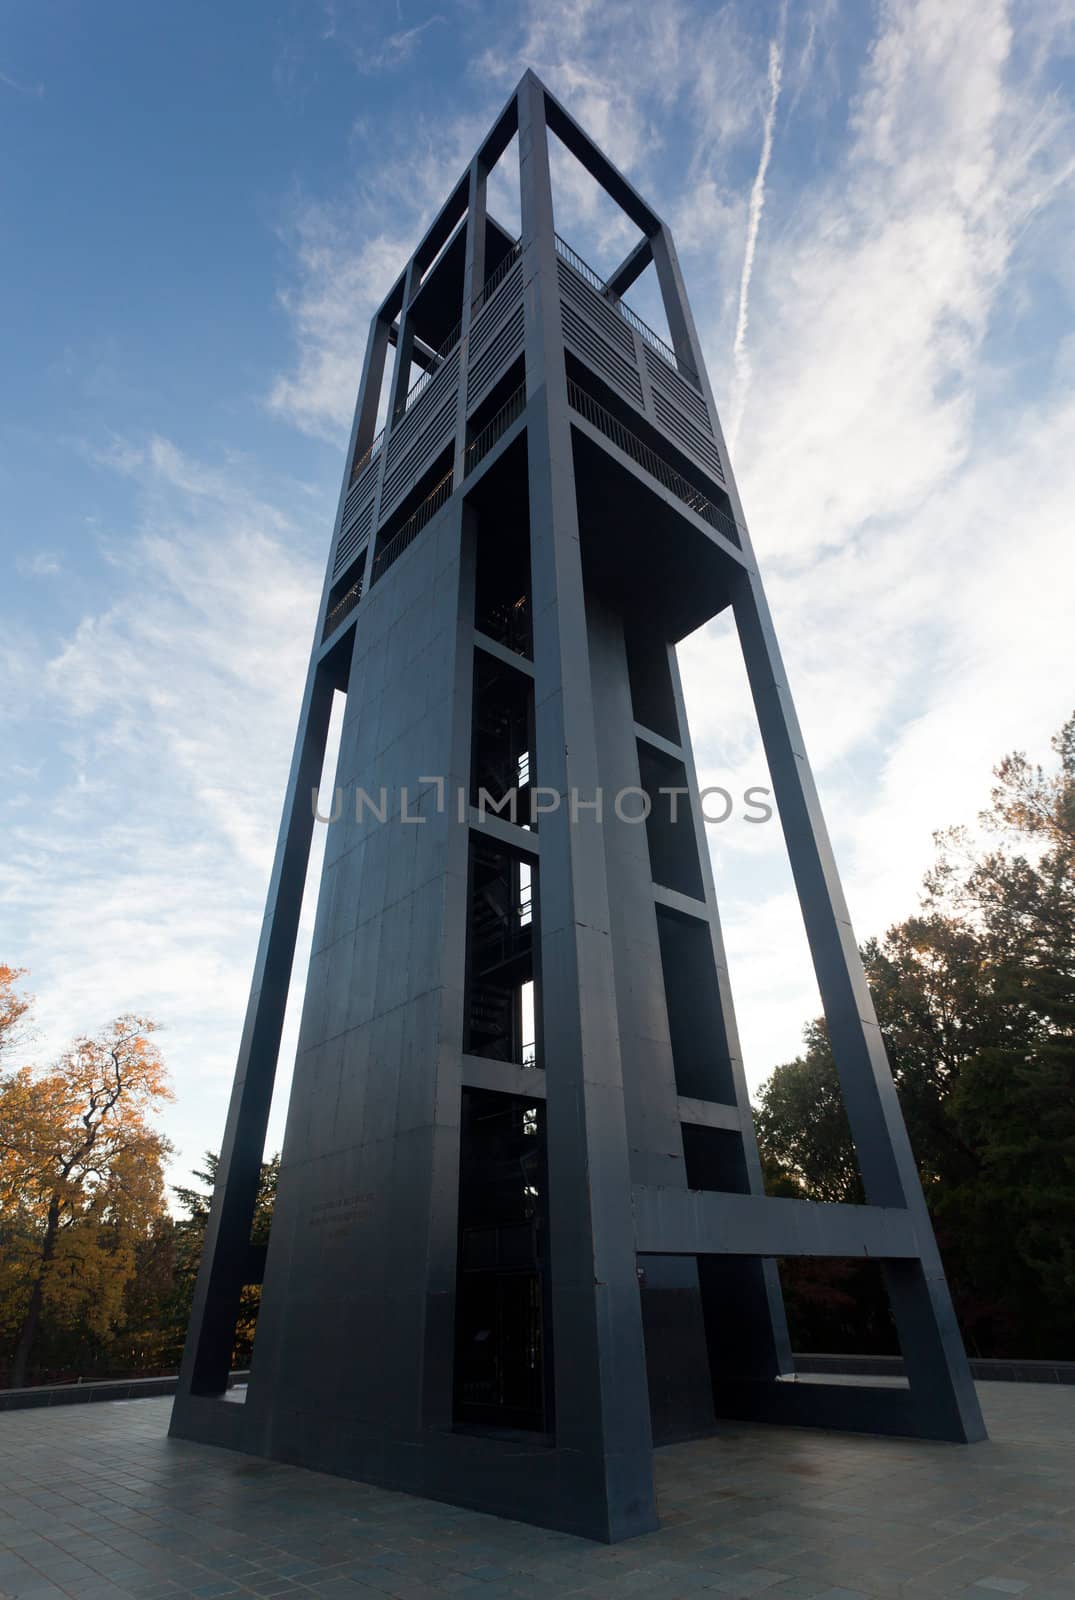 Carillon in Washington DC by steheap